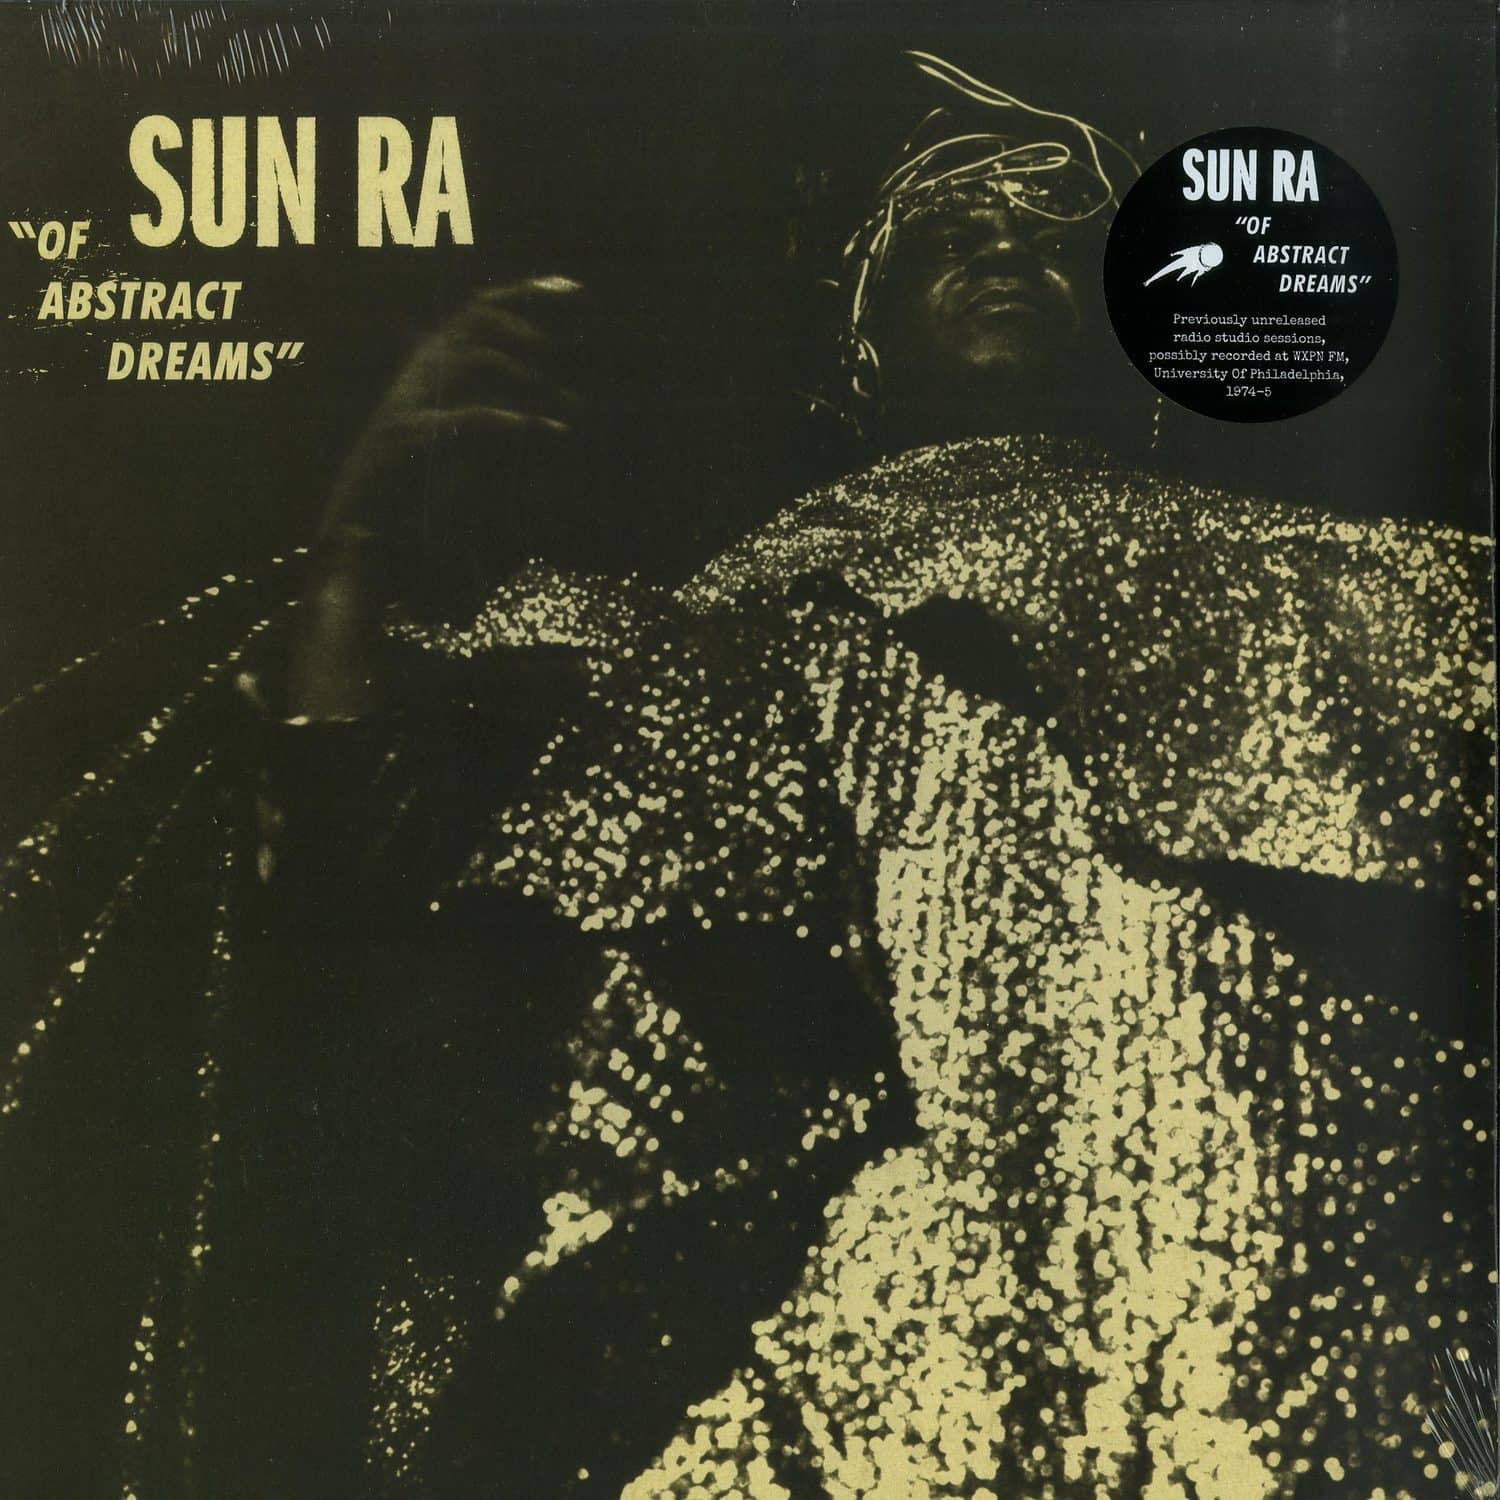 Sun Ra - OF ABSTRACT DREAMS 